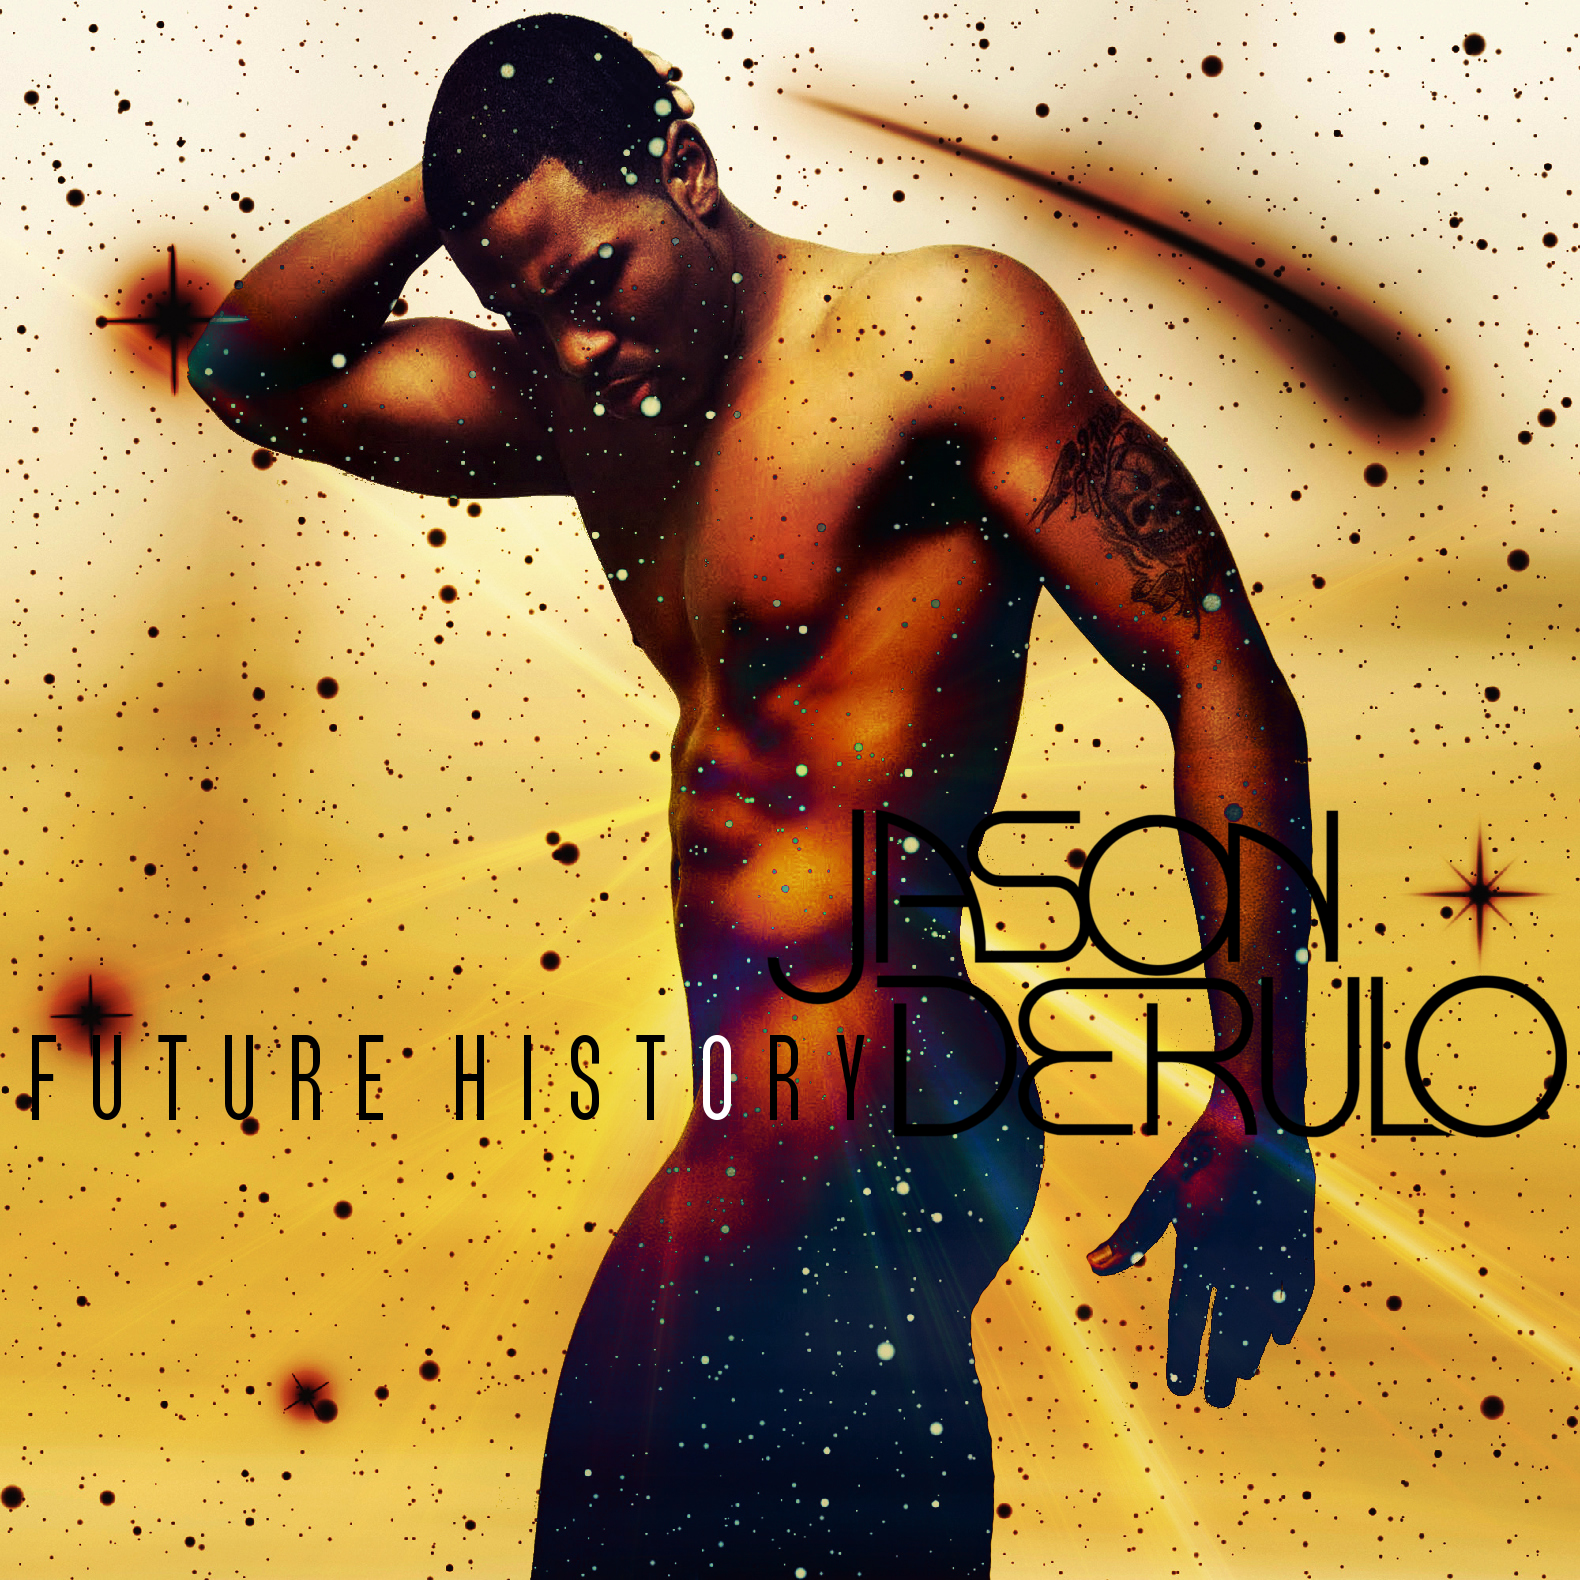 lilbadboy0: Jason Derulo - Future History (Album Covers)1580 x 1580